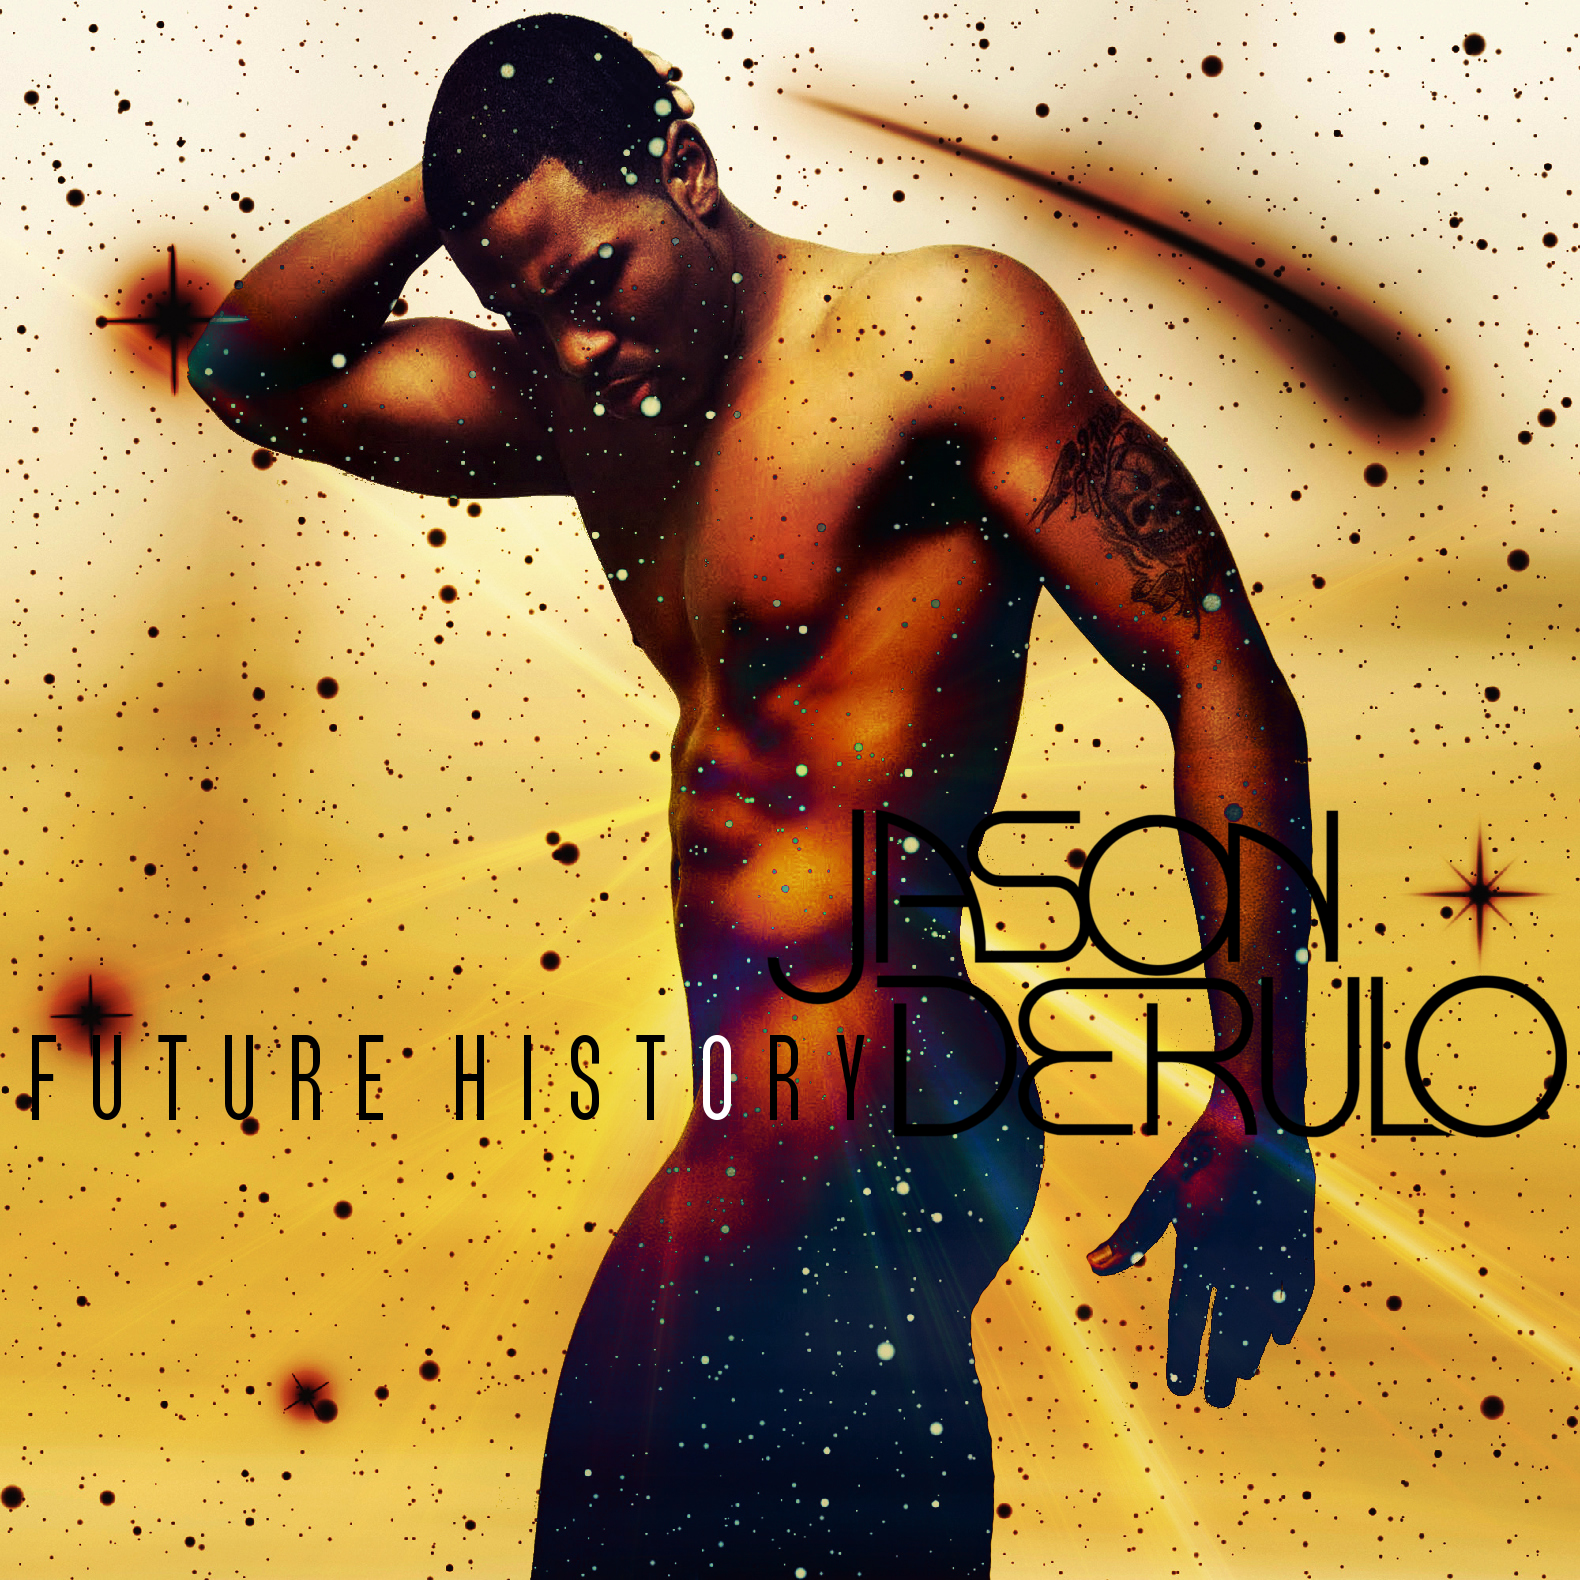 lilbadboy0: Jason Derulo - Future History (Album Covers)1580 x 1580